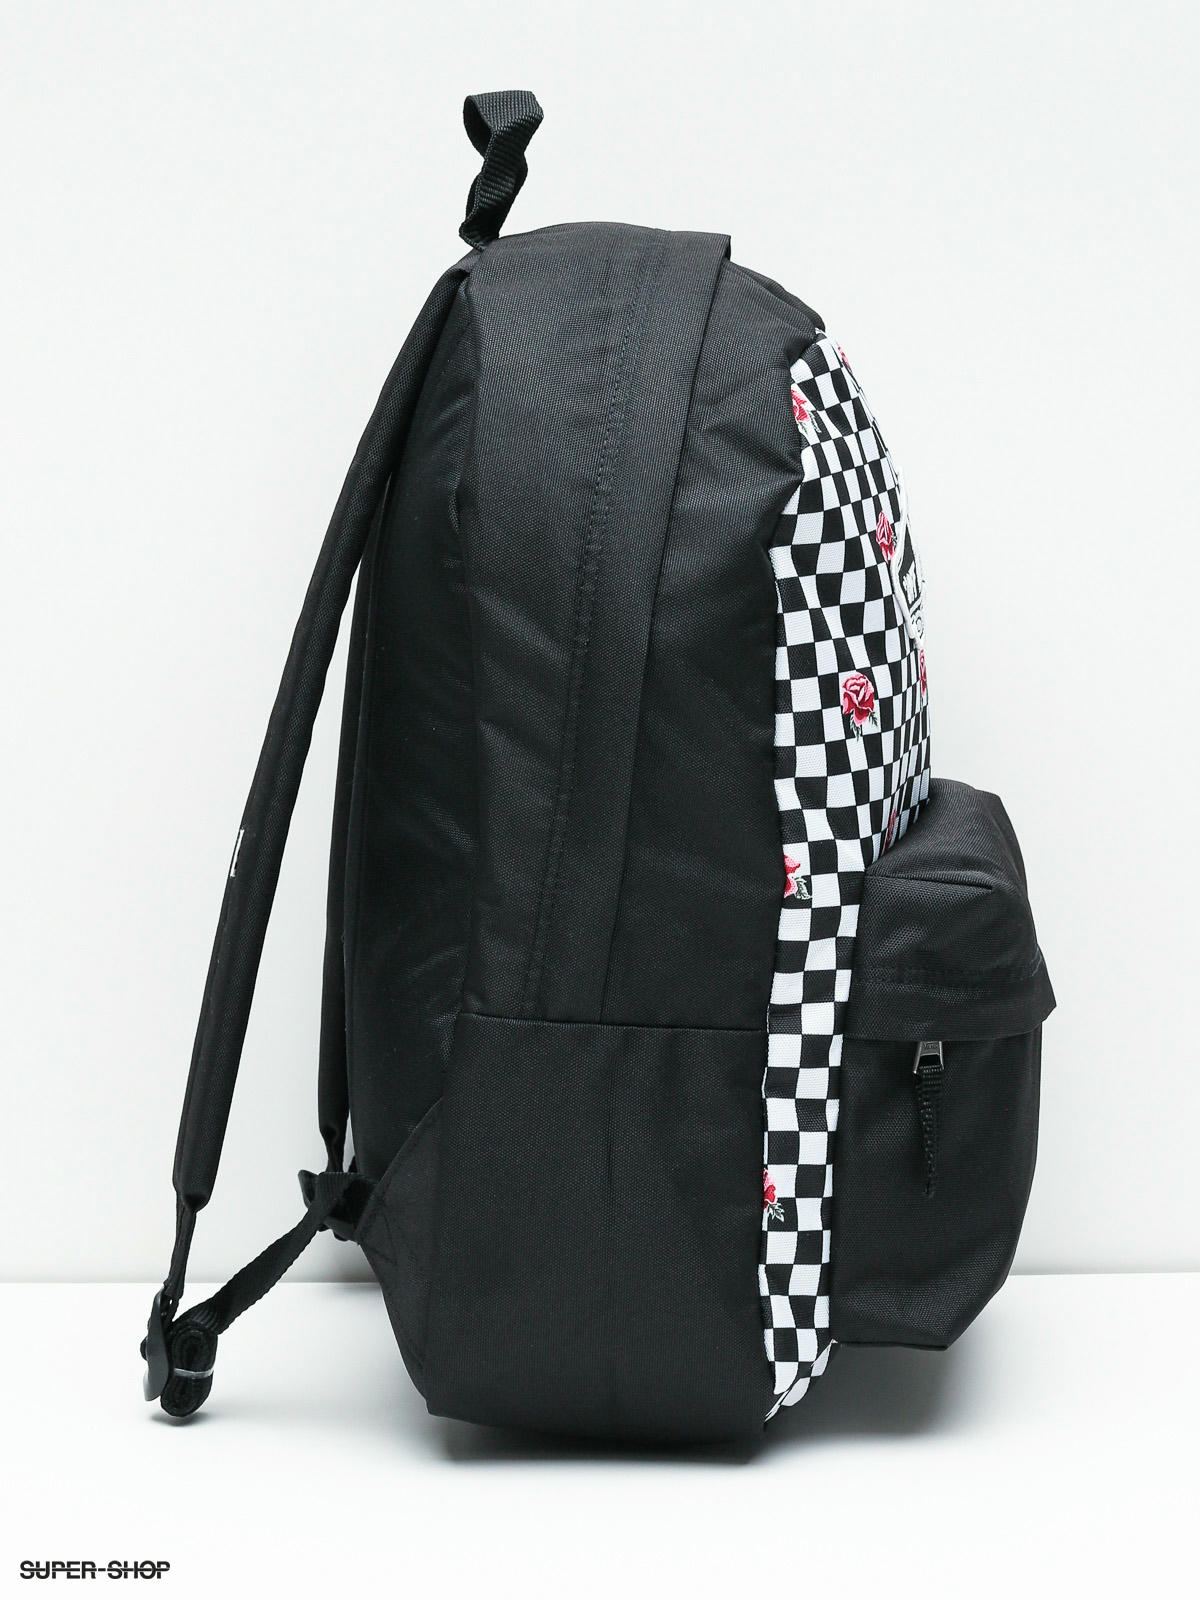 checkered rose vans backpack